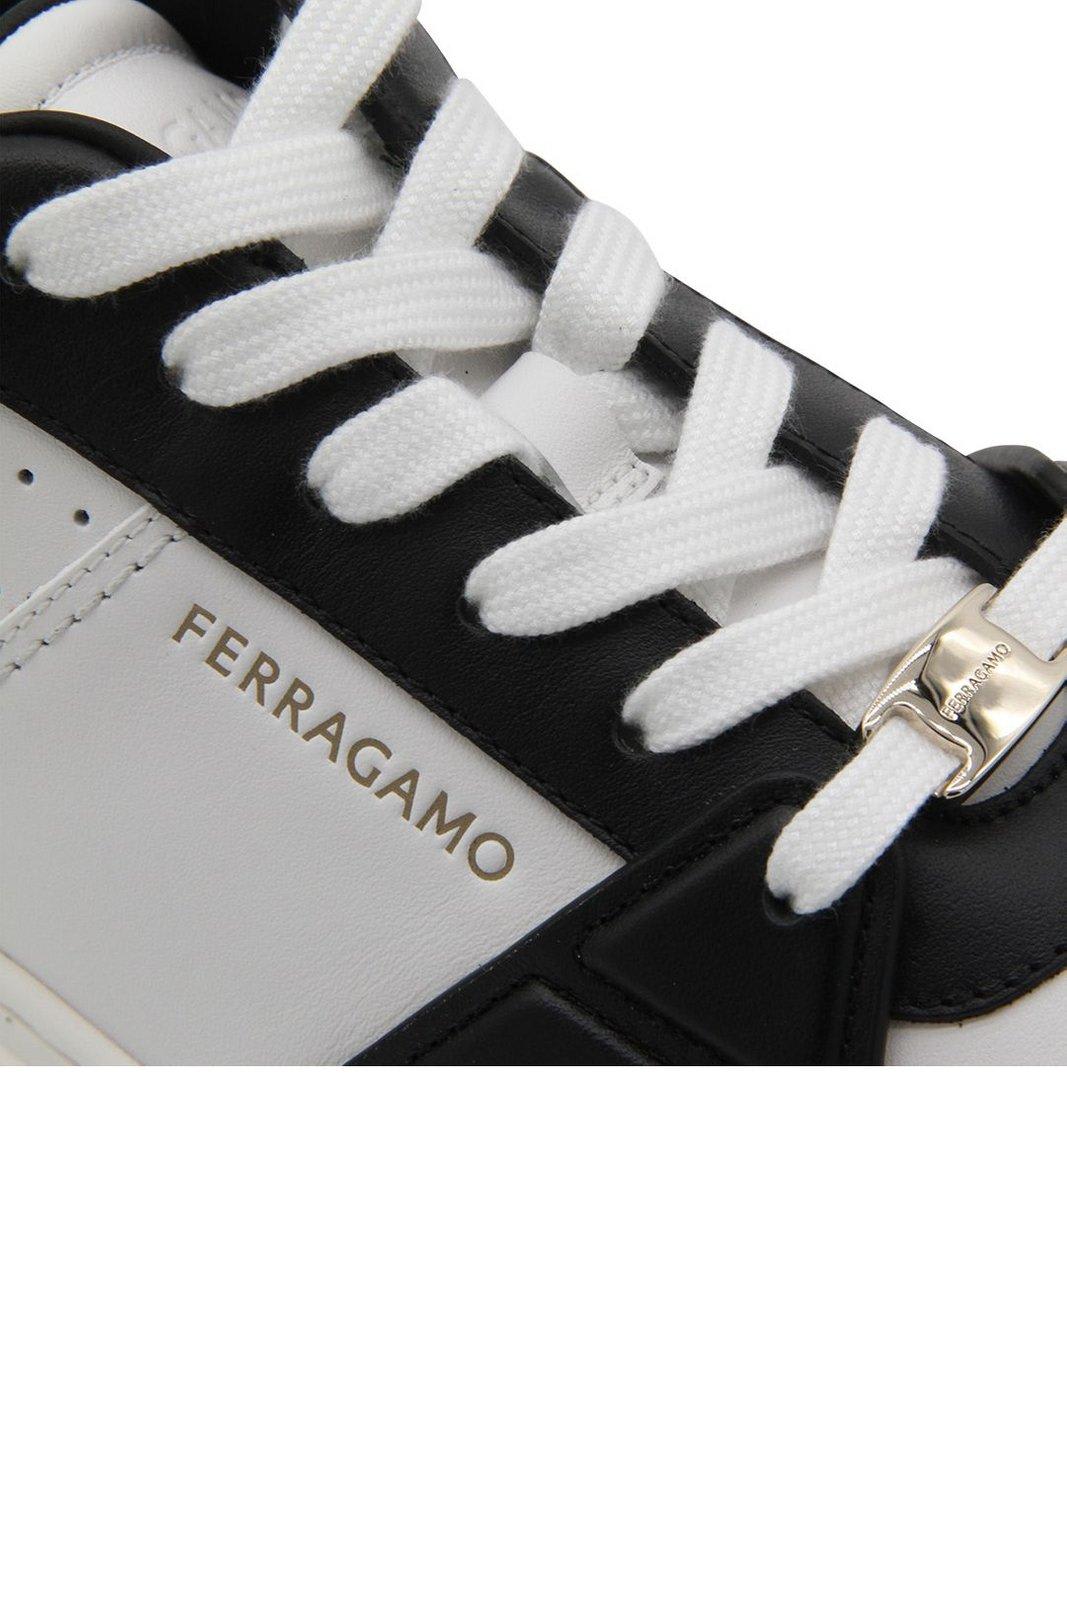 Shop Ferragamo Two-toned Low-top Sneakers In Black/white